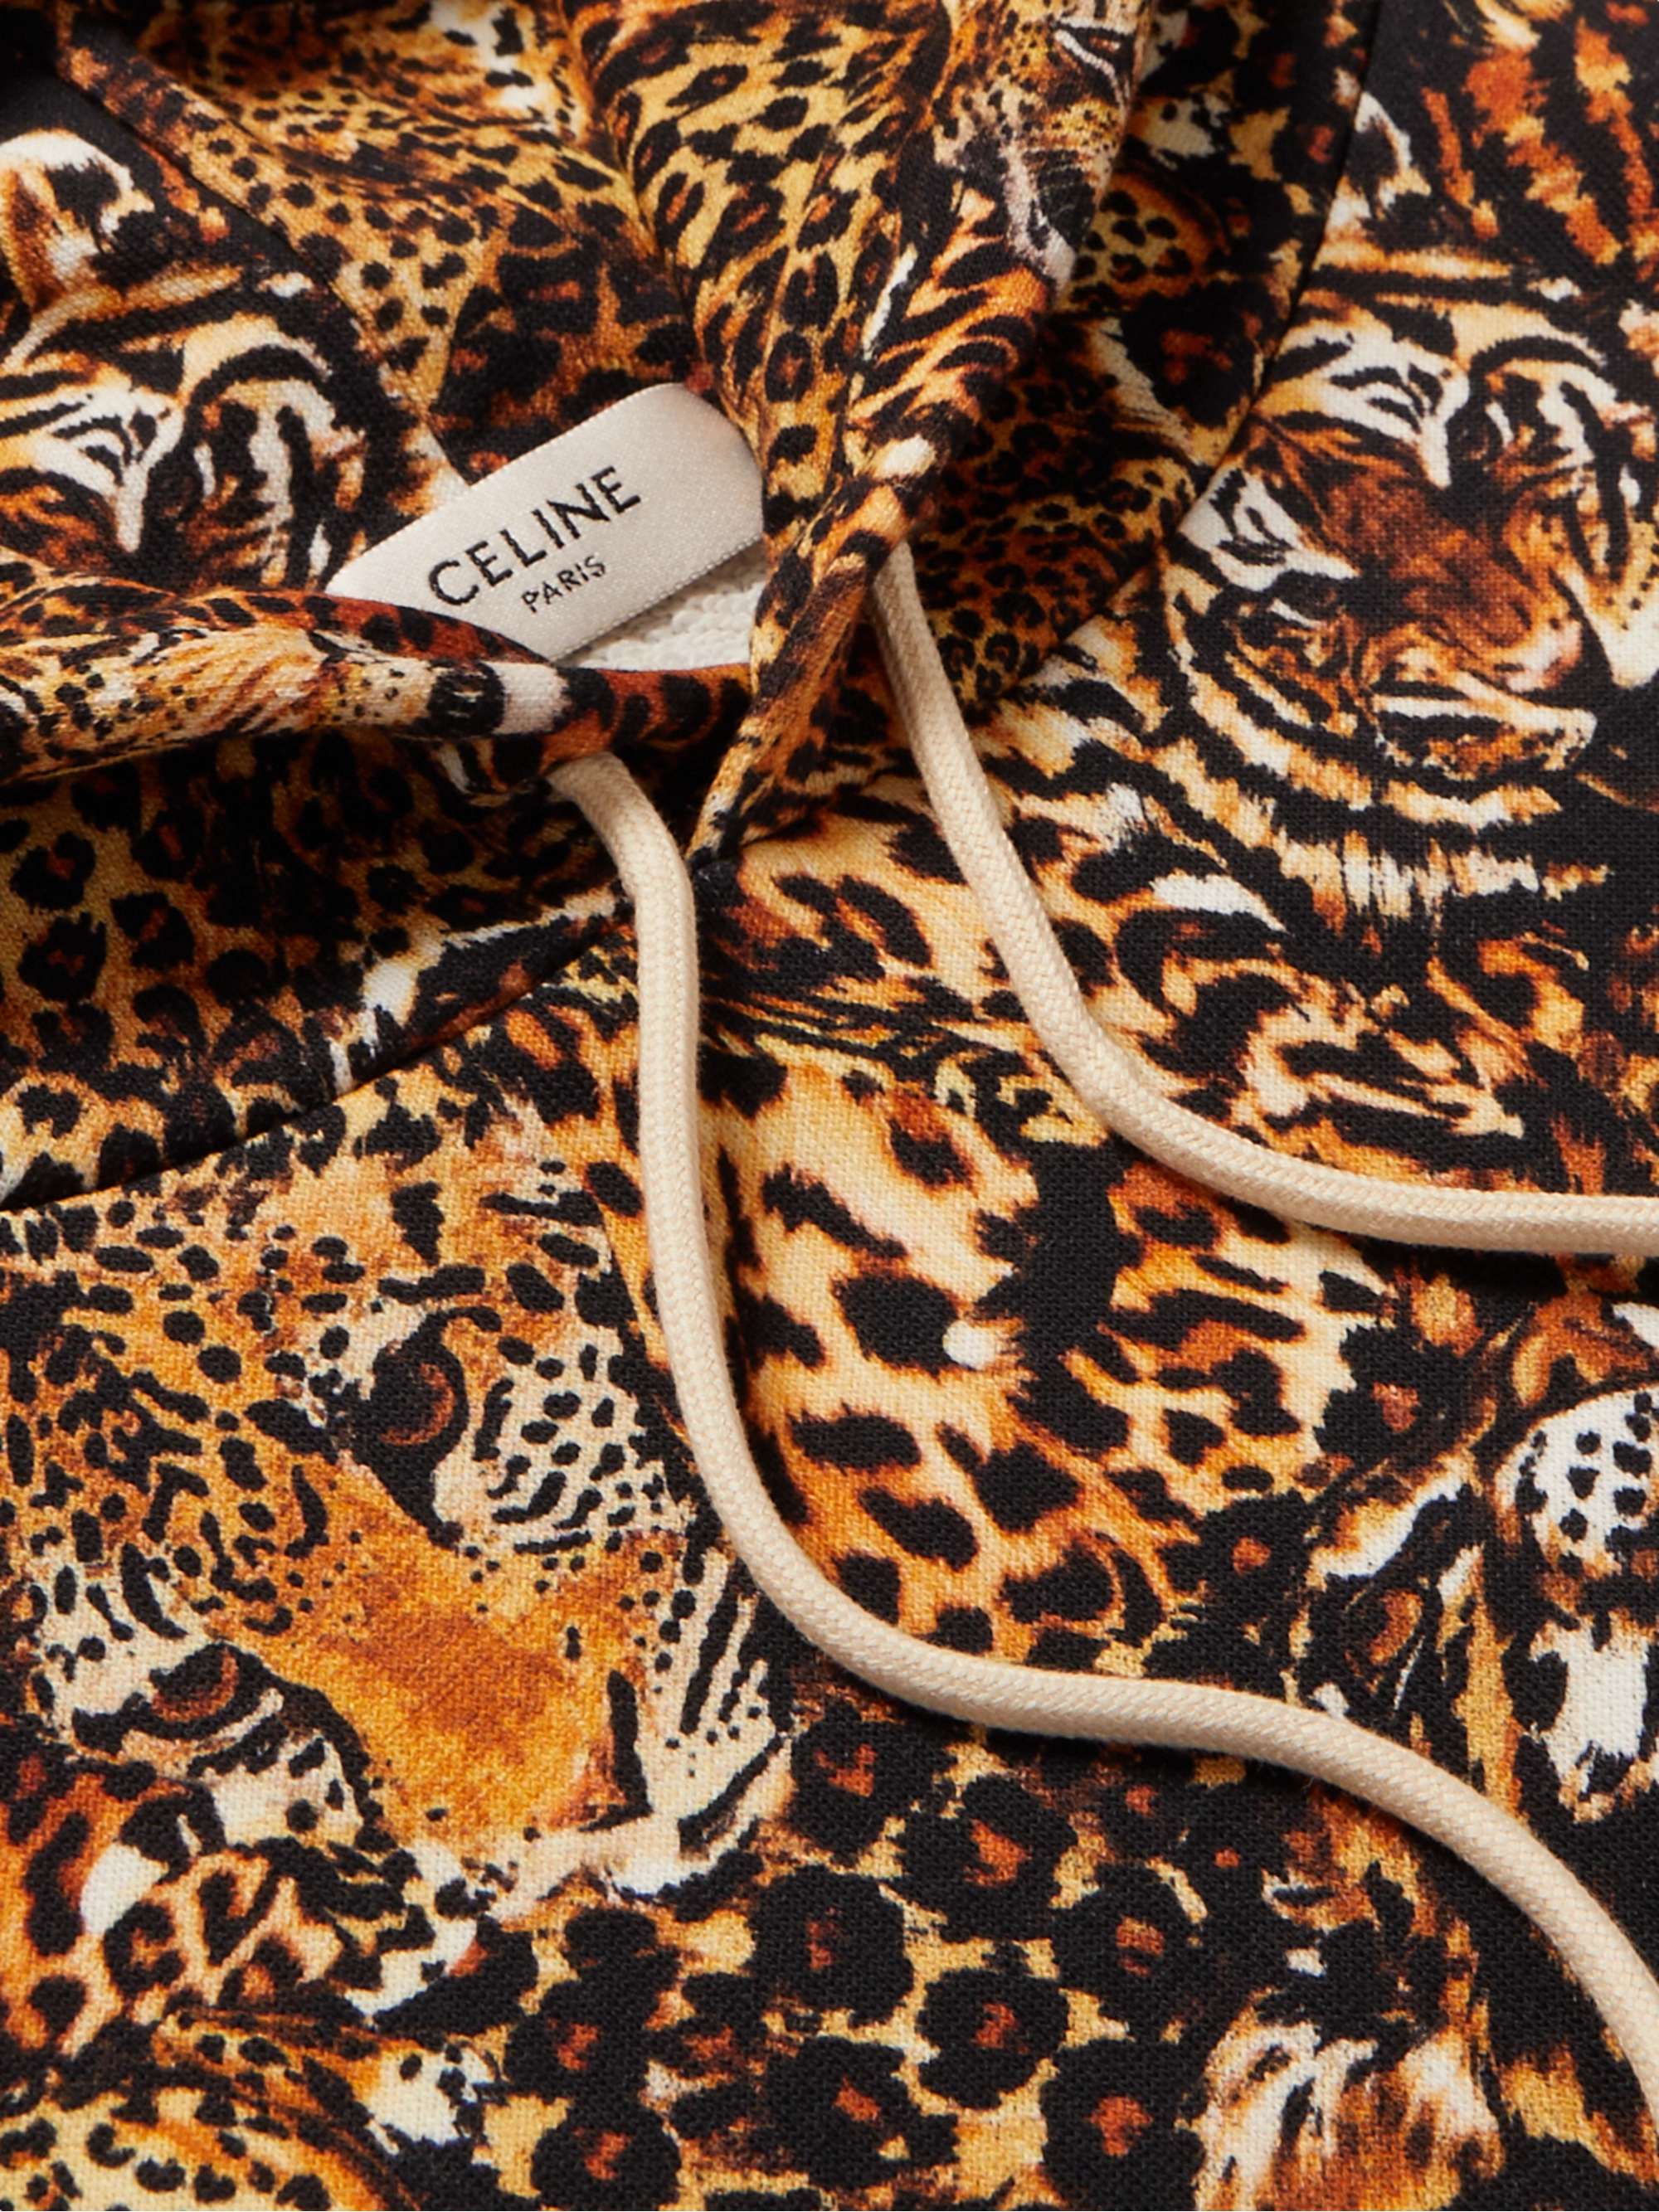 CELINE HOMME Tiger-Print Cotton-Jersey Hoodie